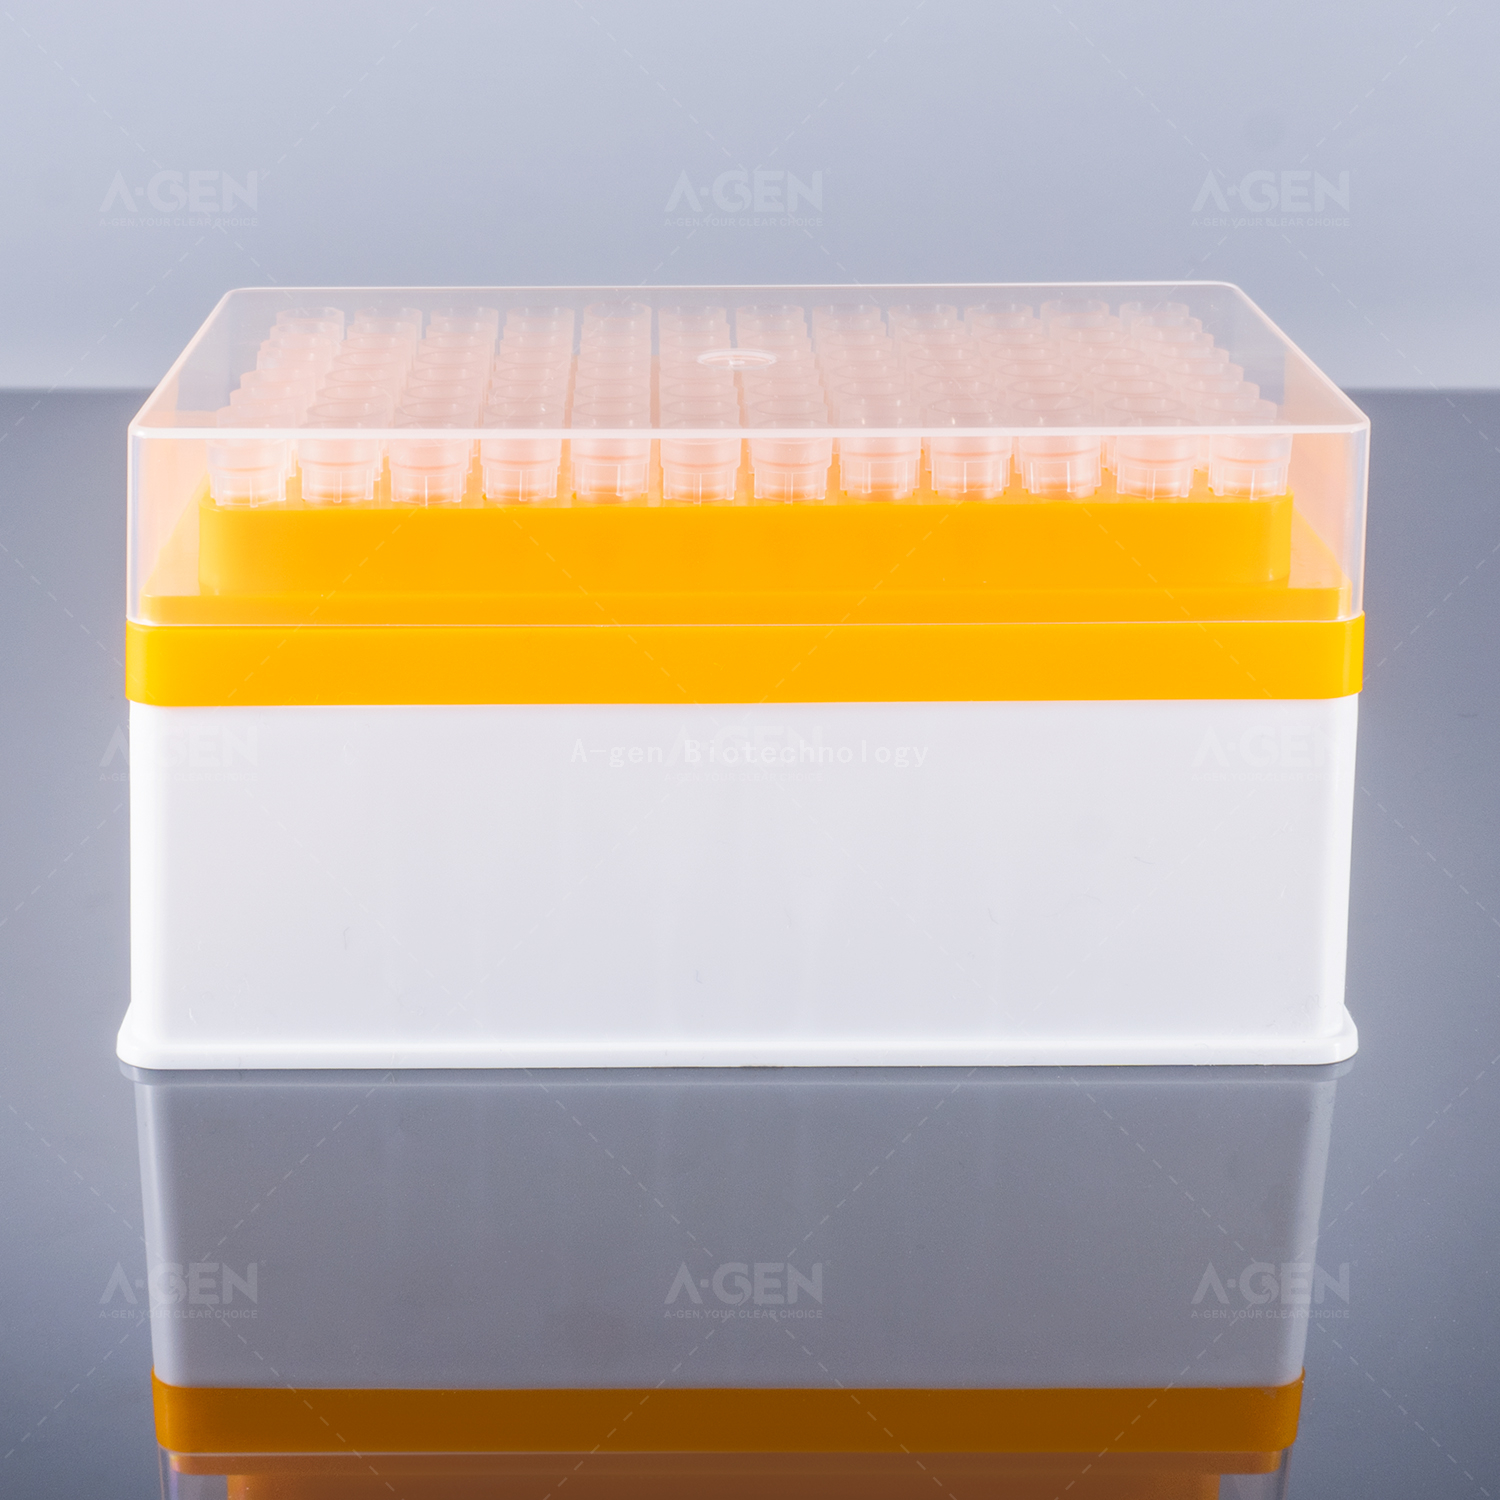 Tecan LiHa 20μL Transparent PP Pipette Tip (SBS Racked,sterilized) for Liquid Transfer No Filter TT-20-RSL Low Residual